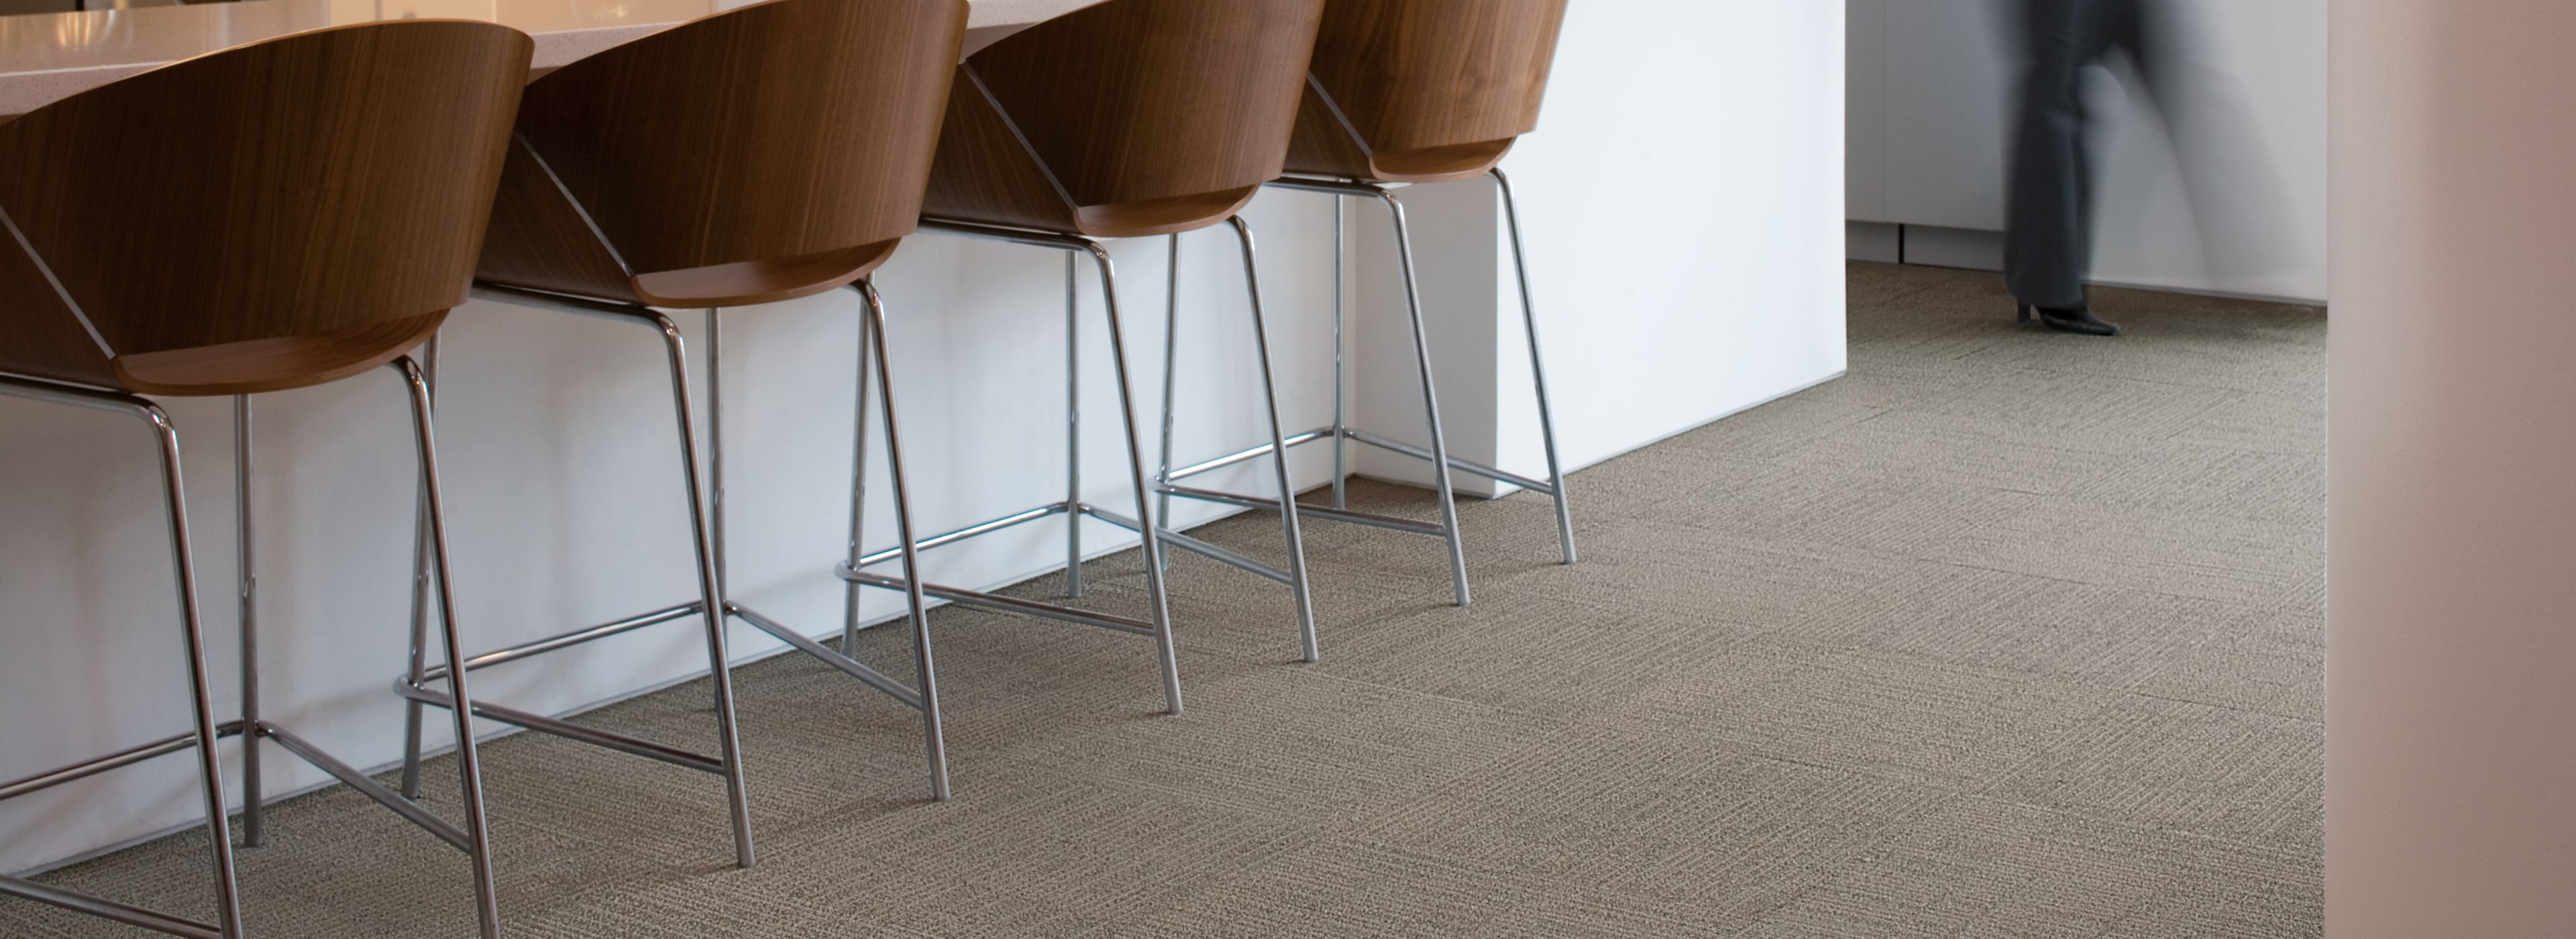 Interface Brescia carpet tile in office break area image number 1